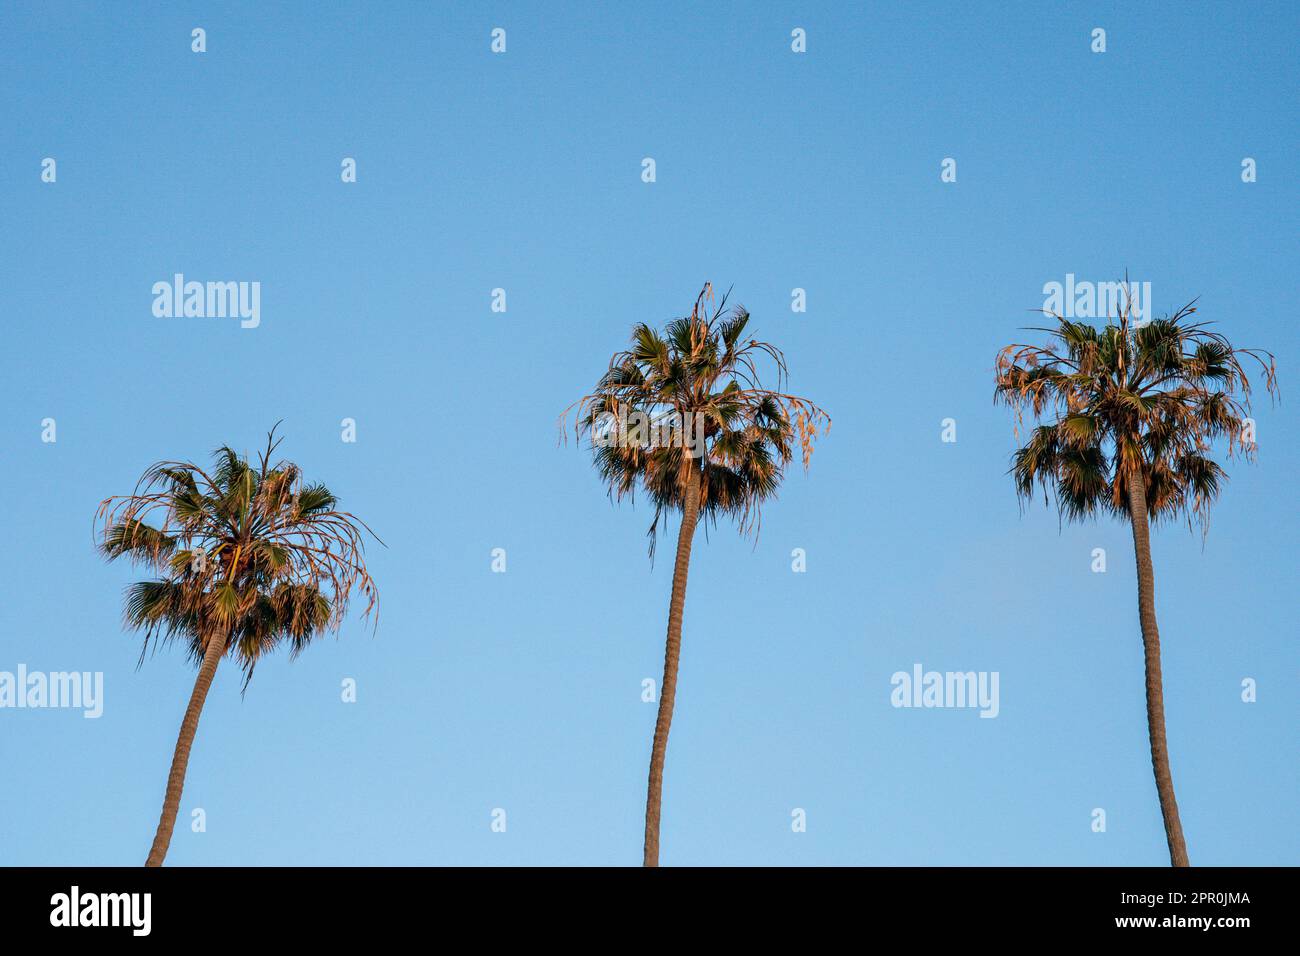 Mexican Fan Palms against a blue sky at Ellen Browning Scripps Park in La Jolla, California. Stock Photo